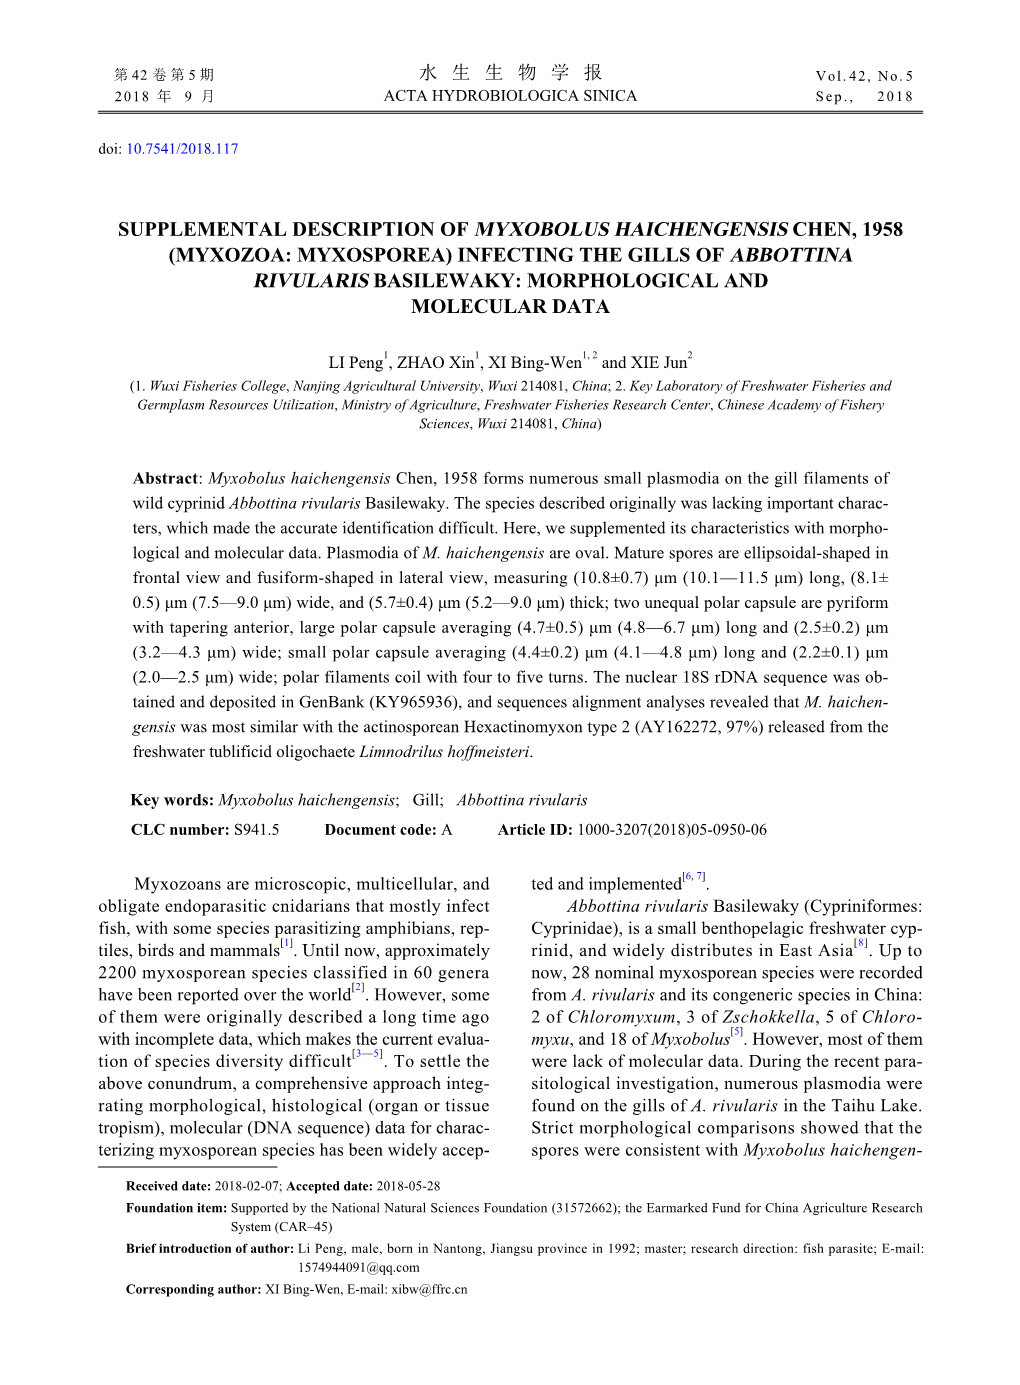 Infecting the Gills of Abbottina Rivularis Basilewaky: Morphological and Molecular Data